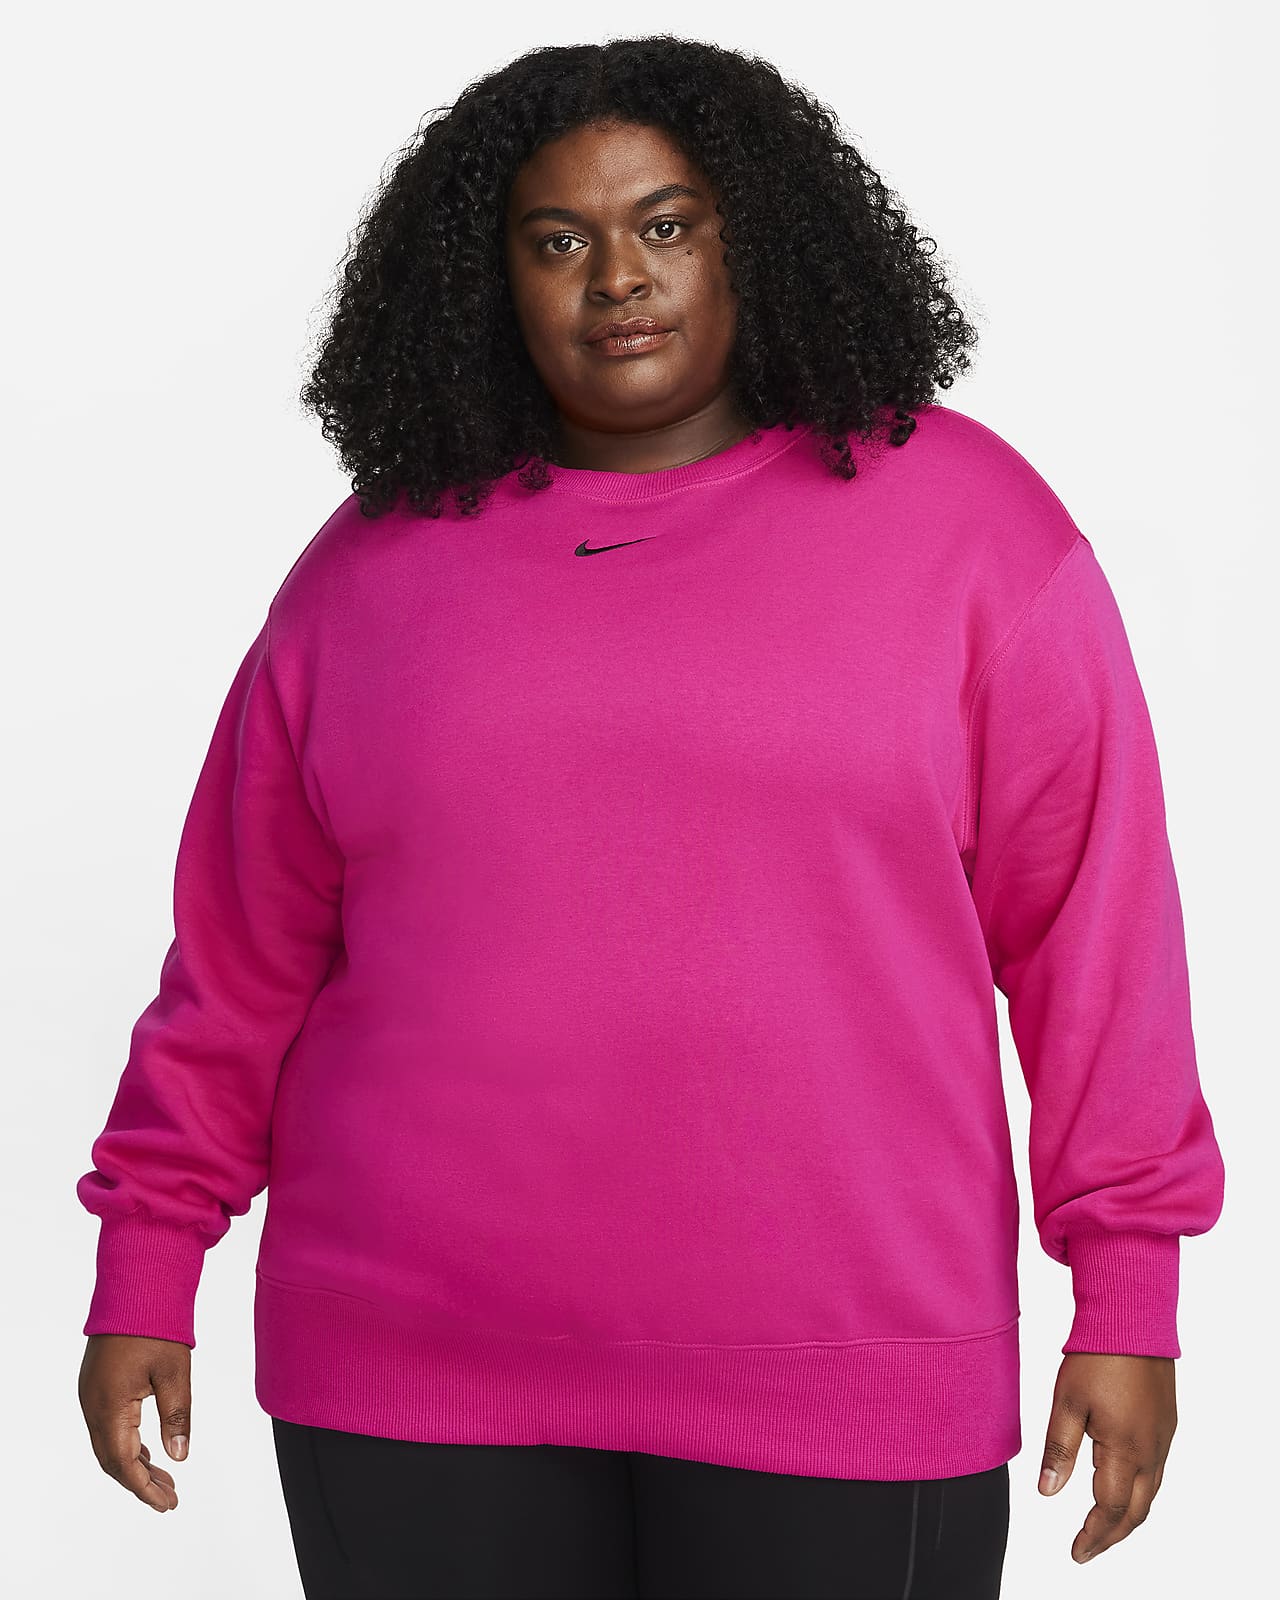 Brand Love Oversized Crew Neck Women's Sweatshirt